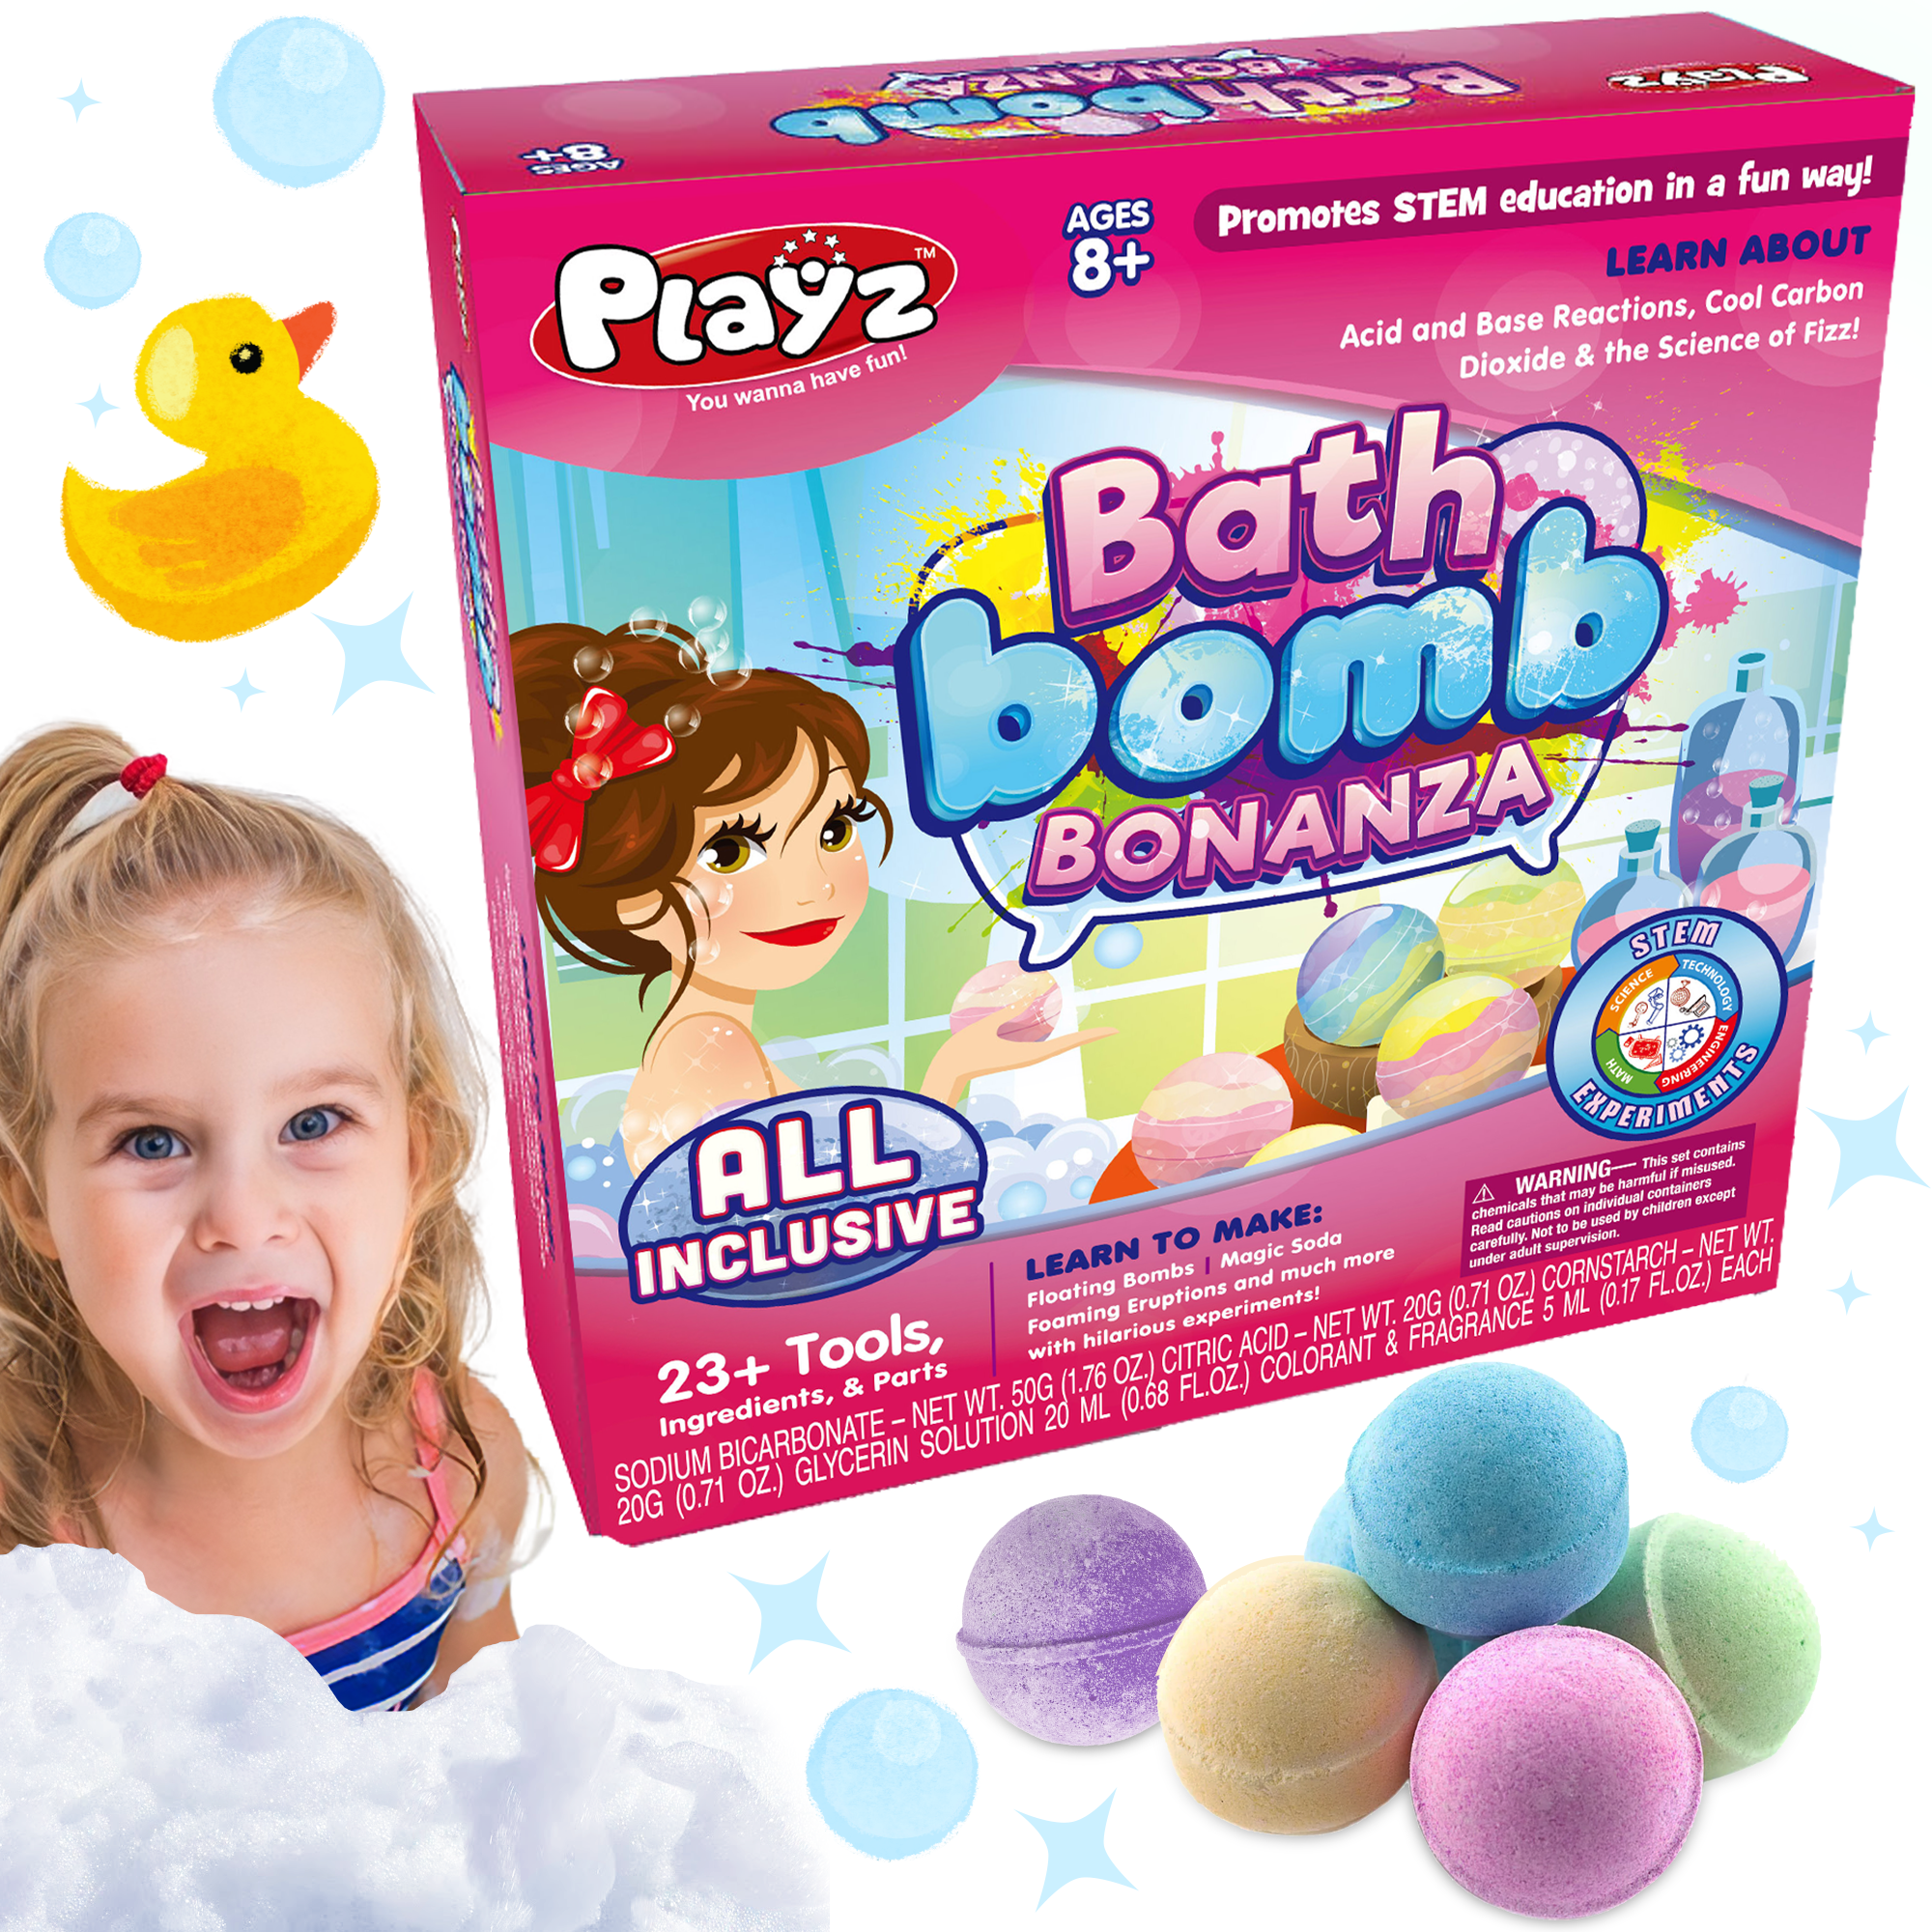 Playz Bath Bomb Bonanza Science Activity, Craft, & Experiment Kit - 23+ Tools to Make Magic Soda, Foaming Eruptions, Floating